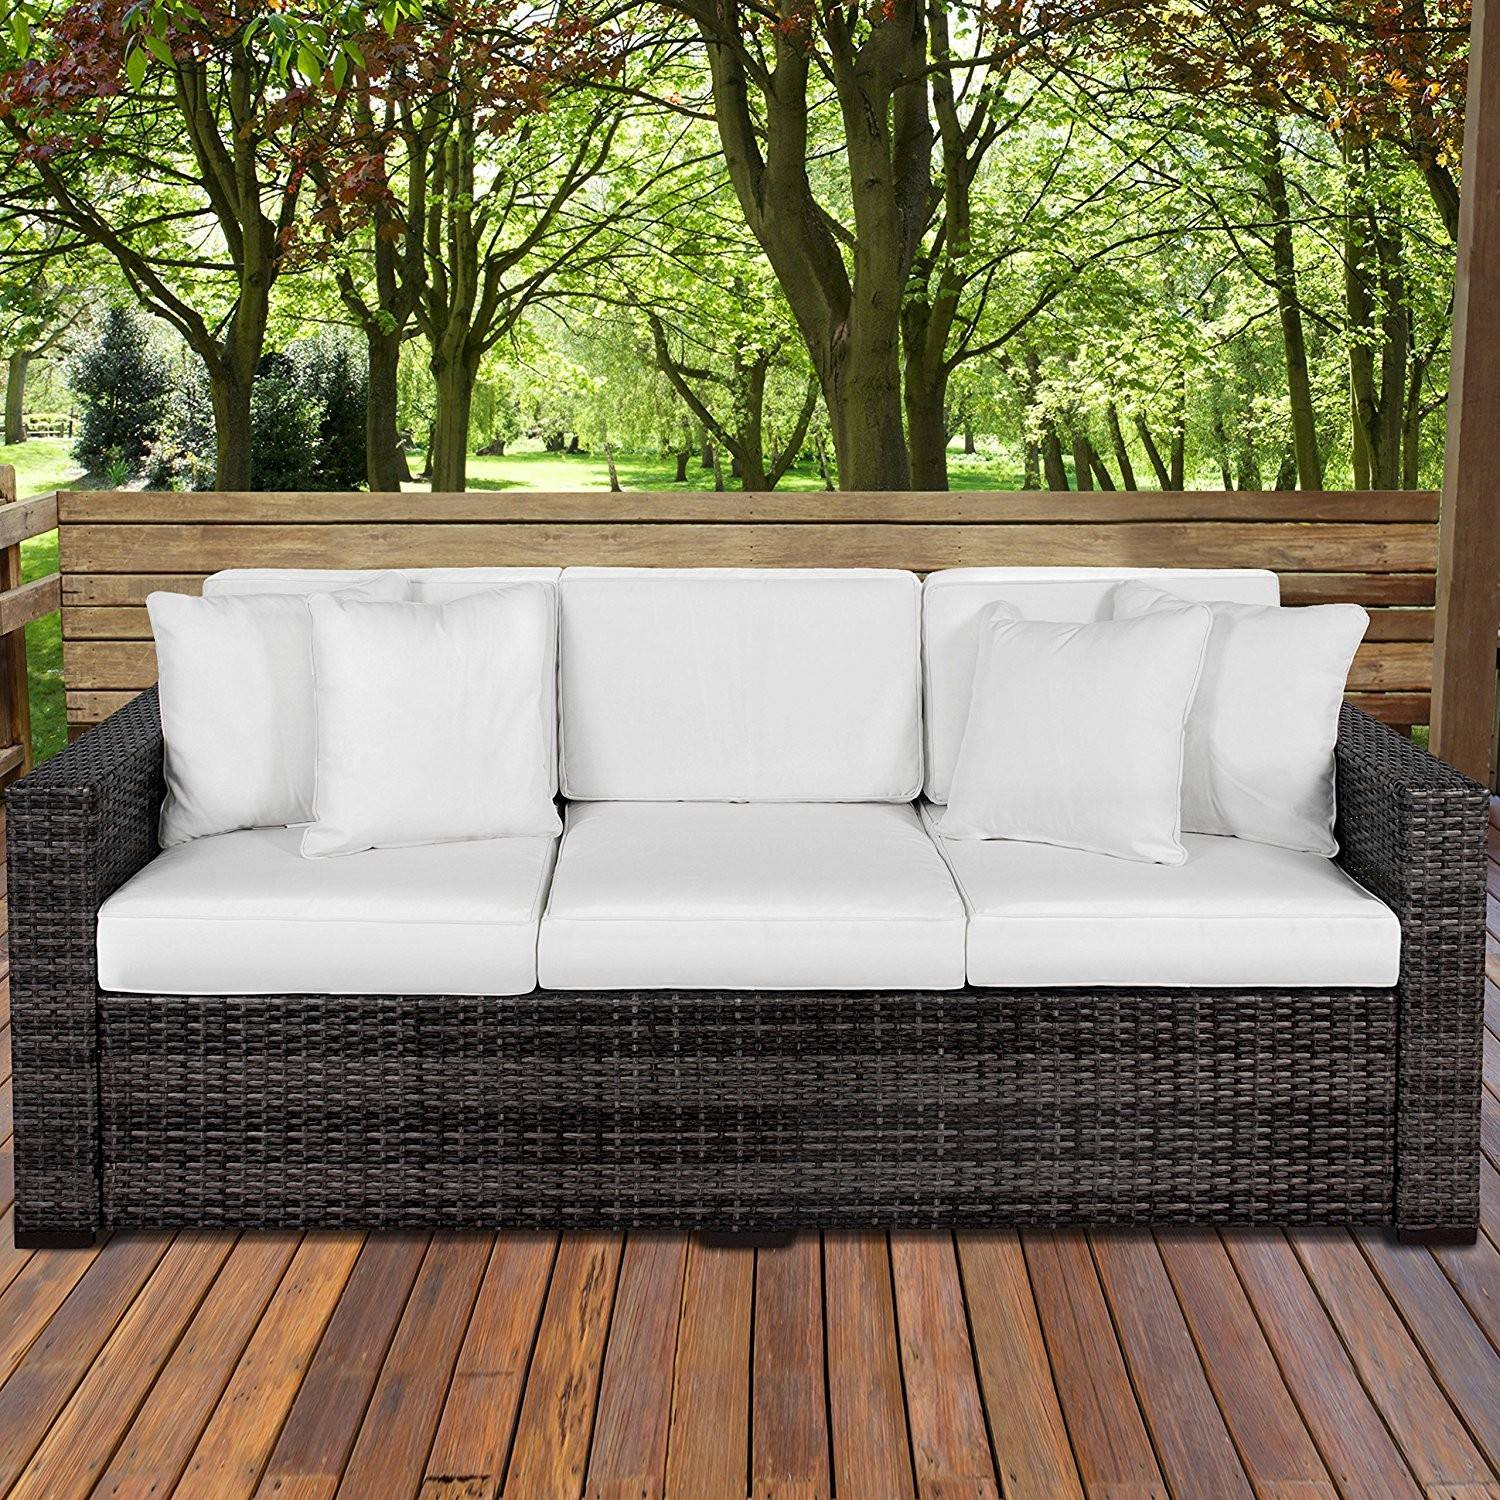 Best Diy Outdoor Sofa Ideas